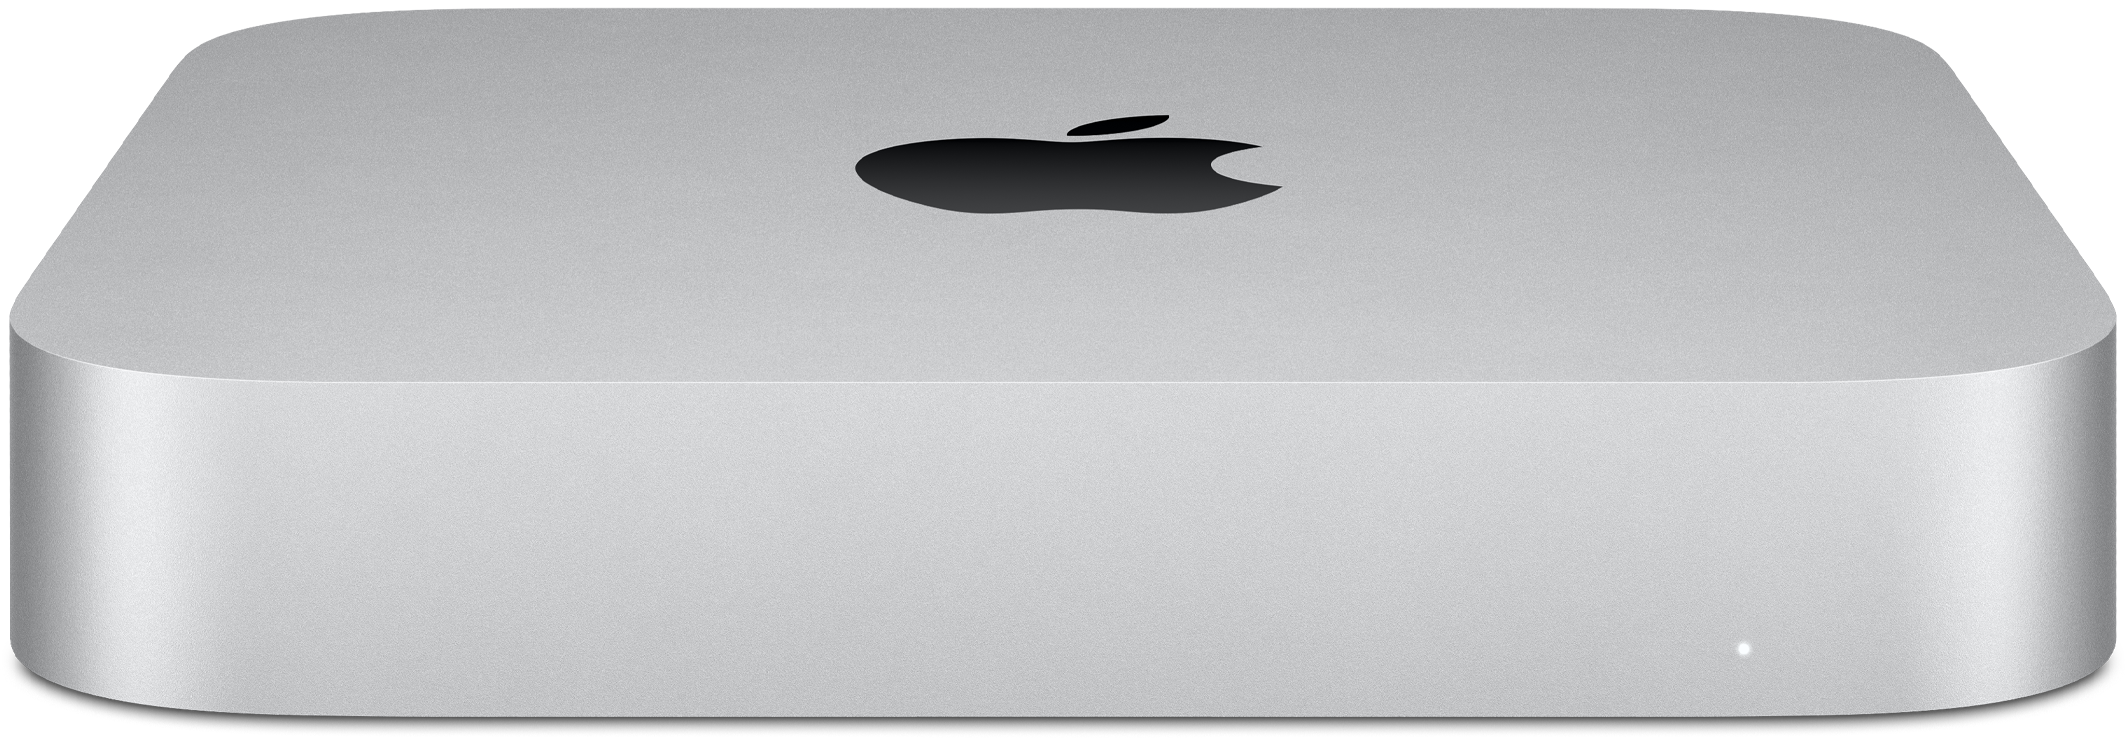 Mac mini 新しい心臓。さらなる能力。Apple M1チップを搭載したMac mini、登場。最大のパワーを、小さなボディで。